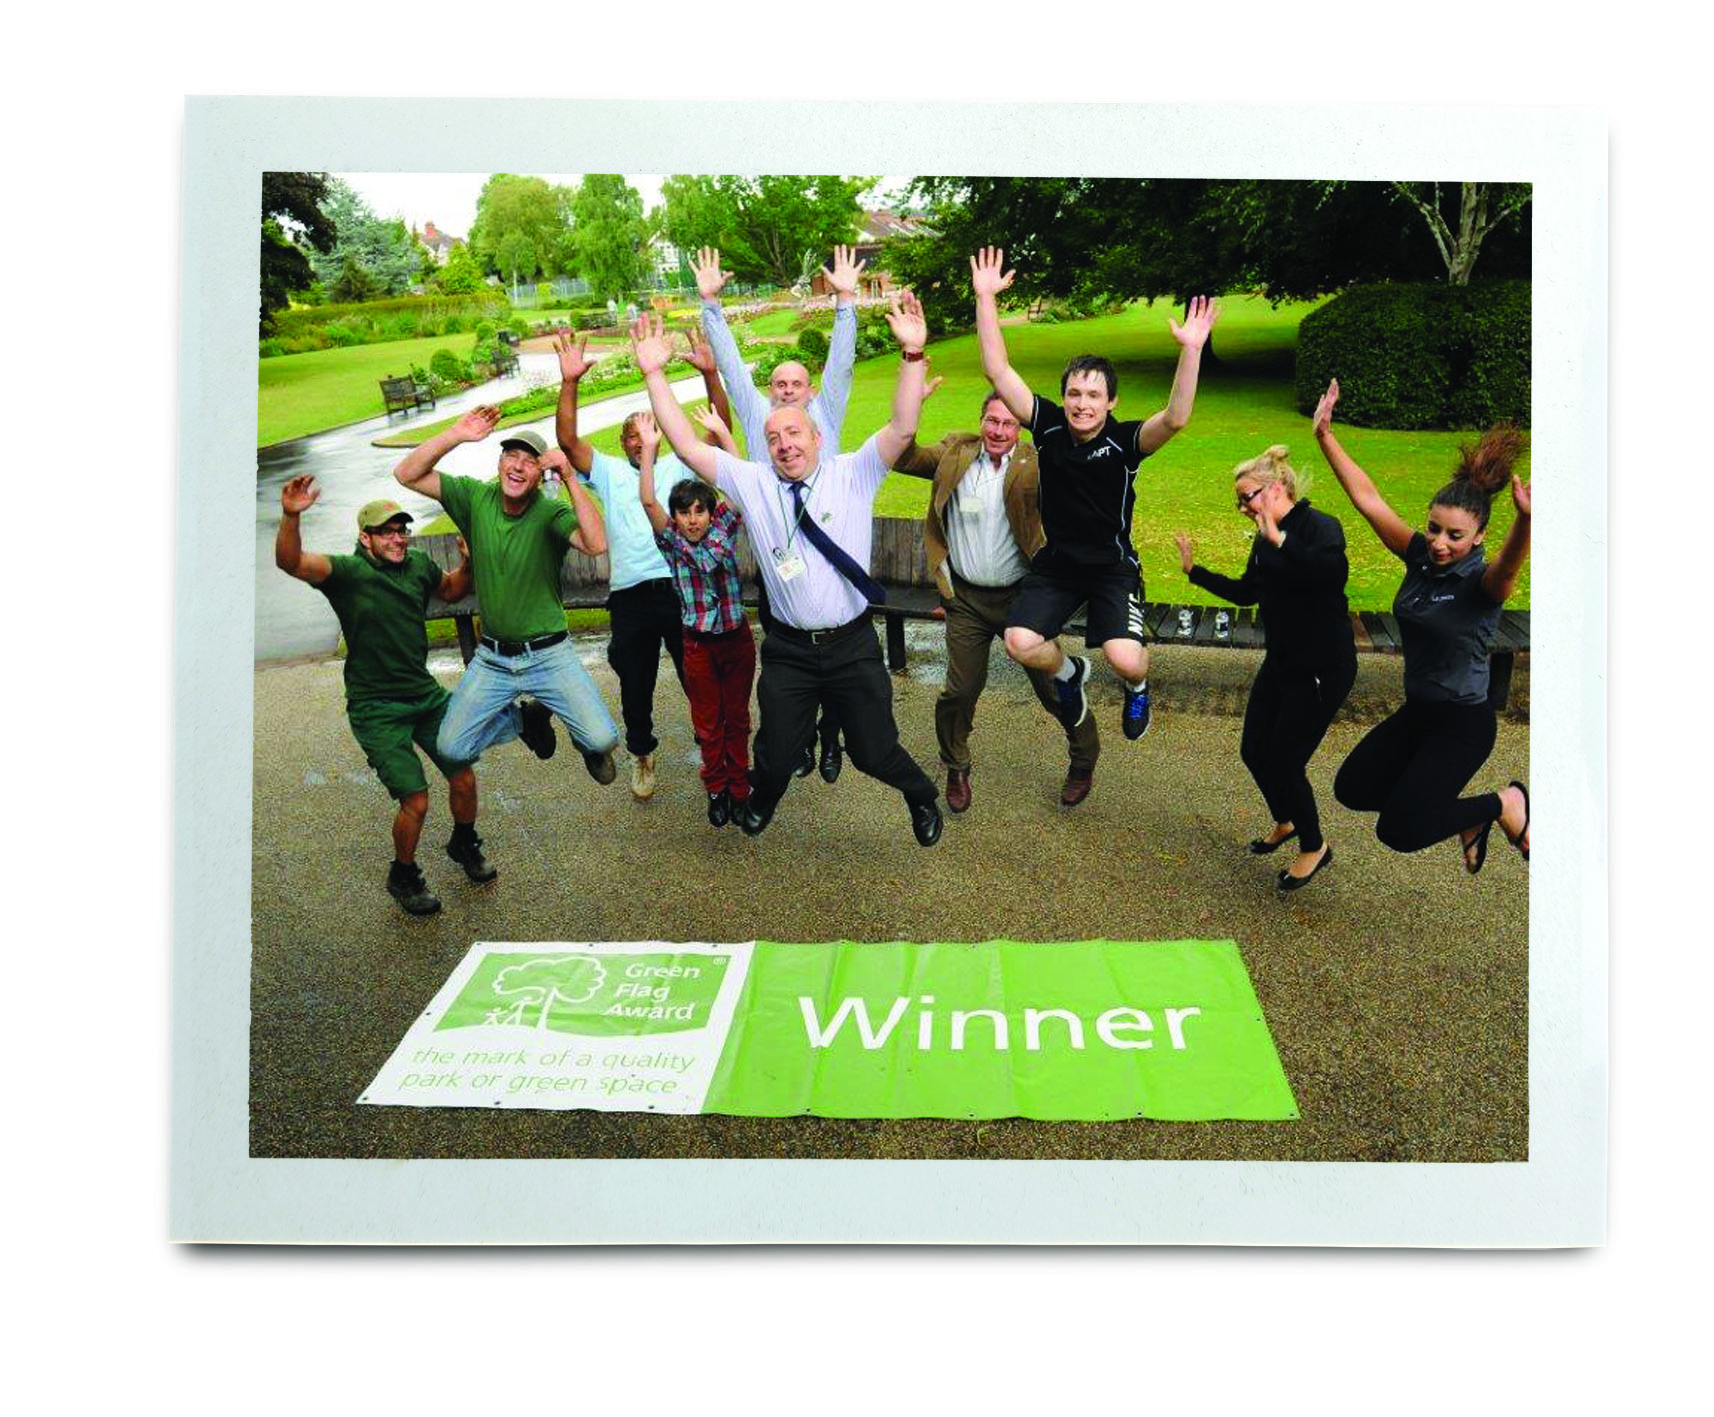 An image of people celebrating winning a Green Flag Award